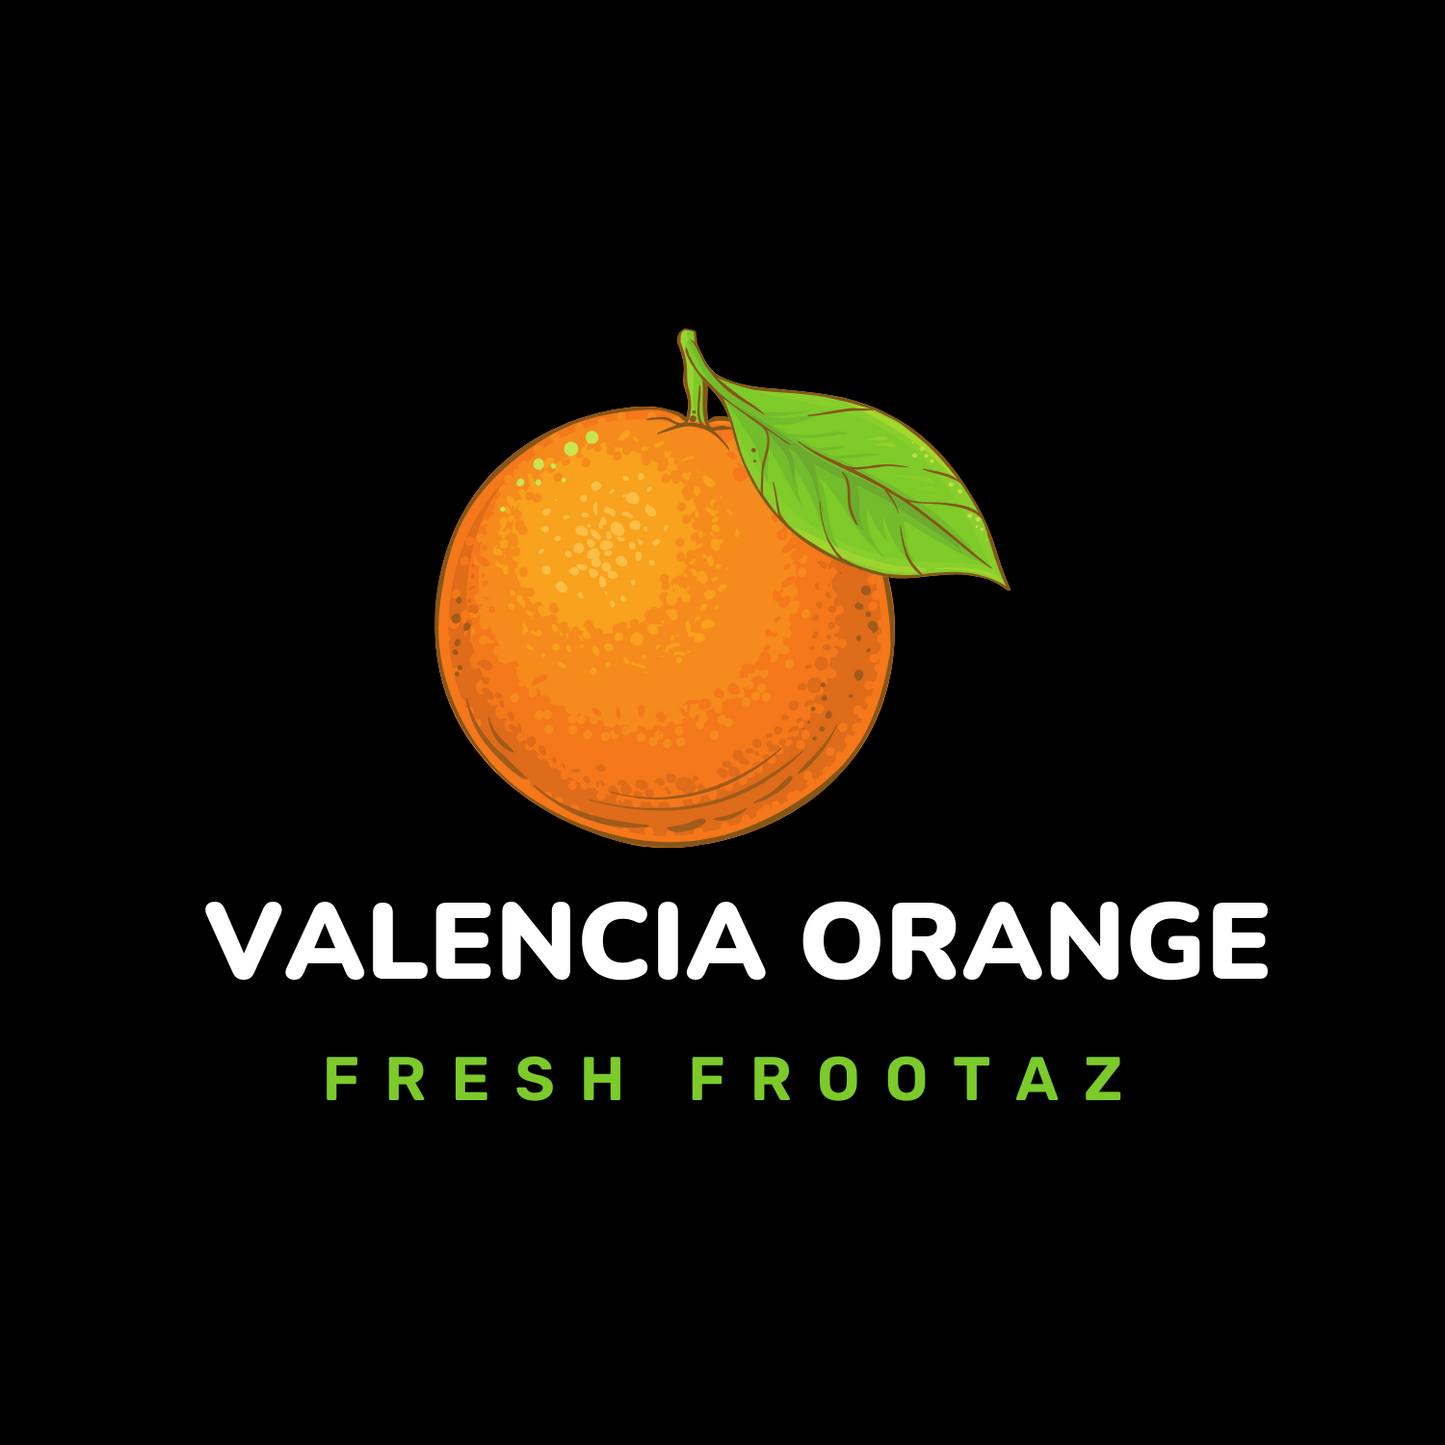 California Valencia Oranges (Each.)